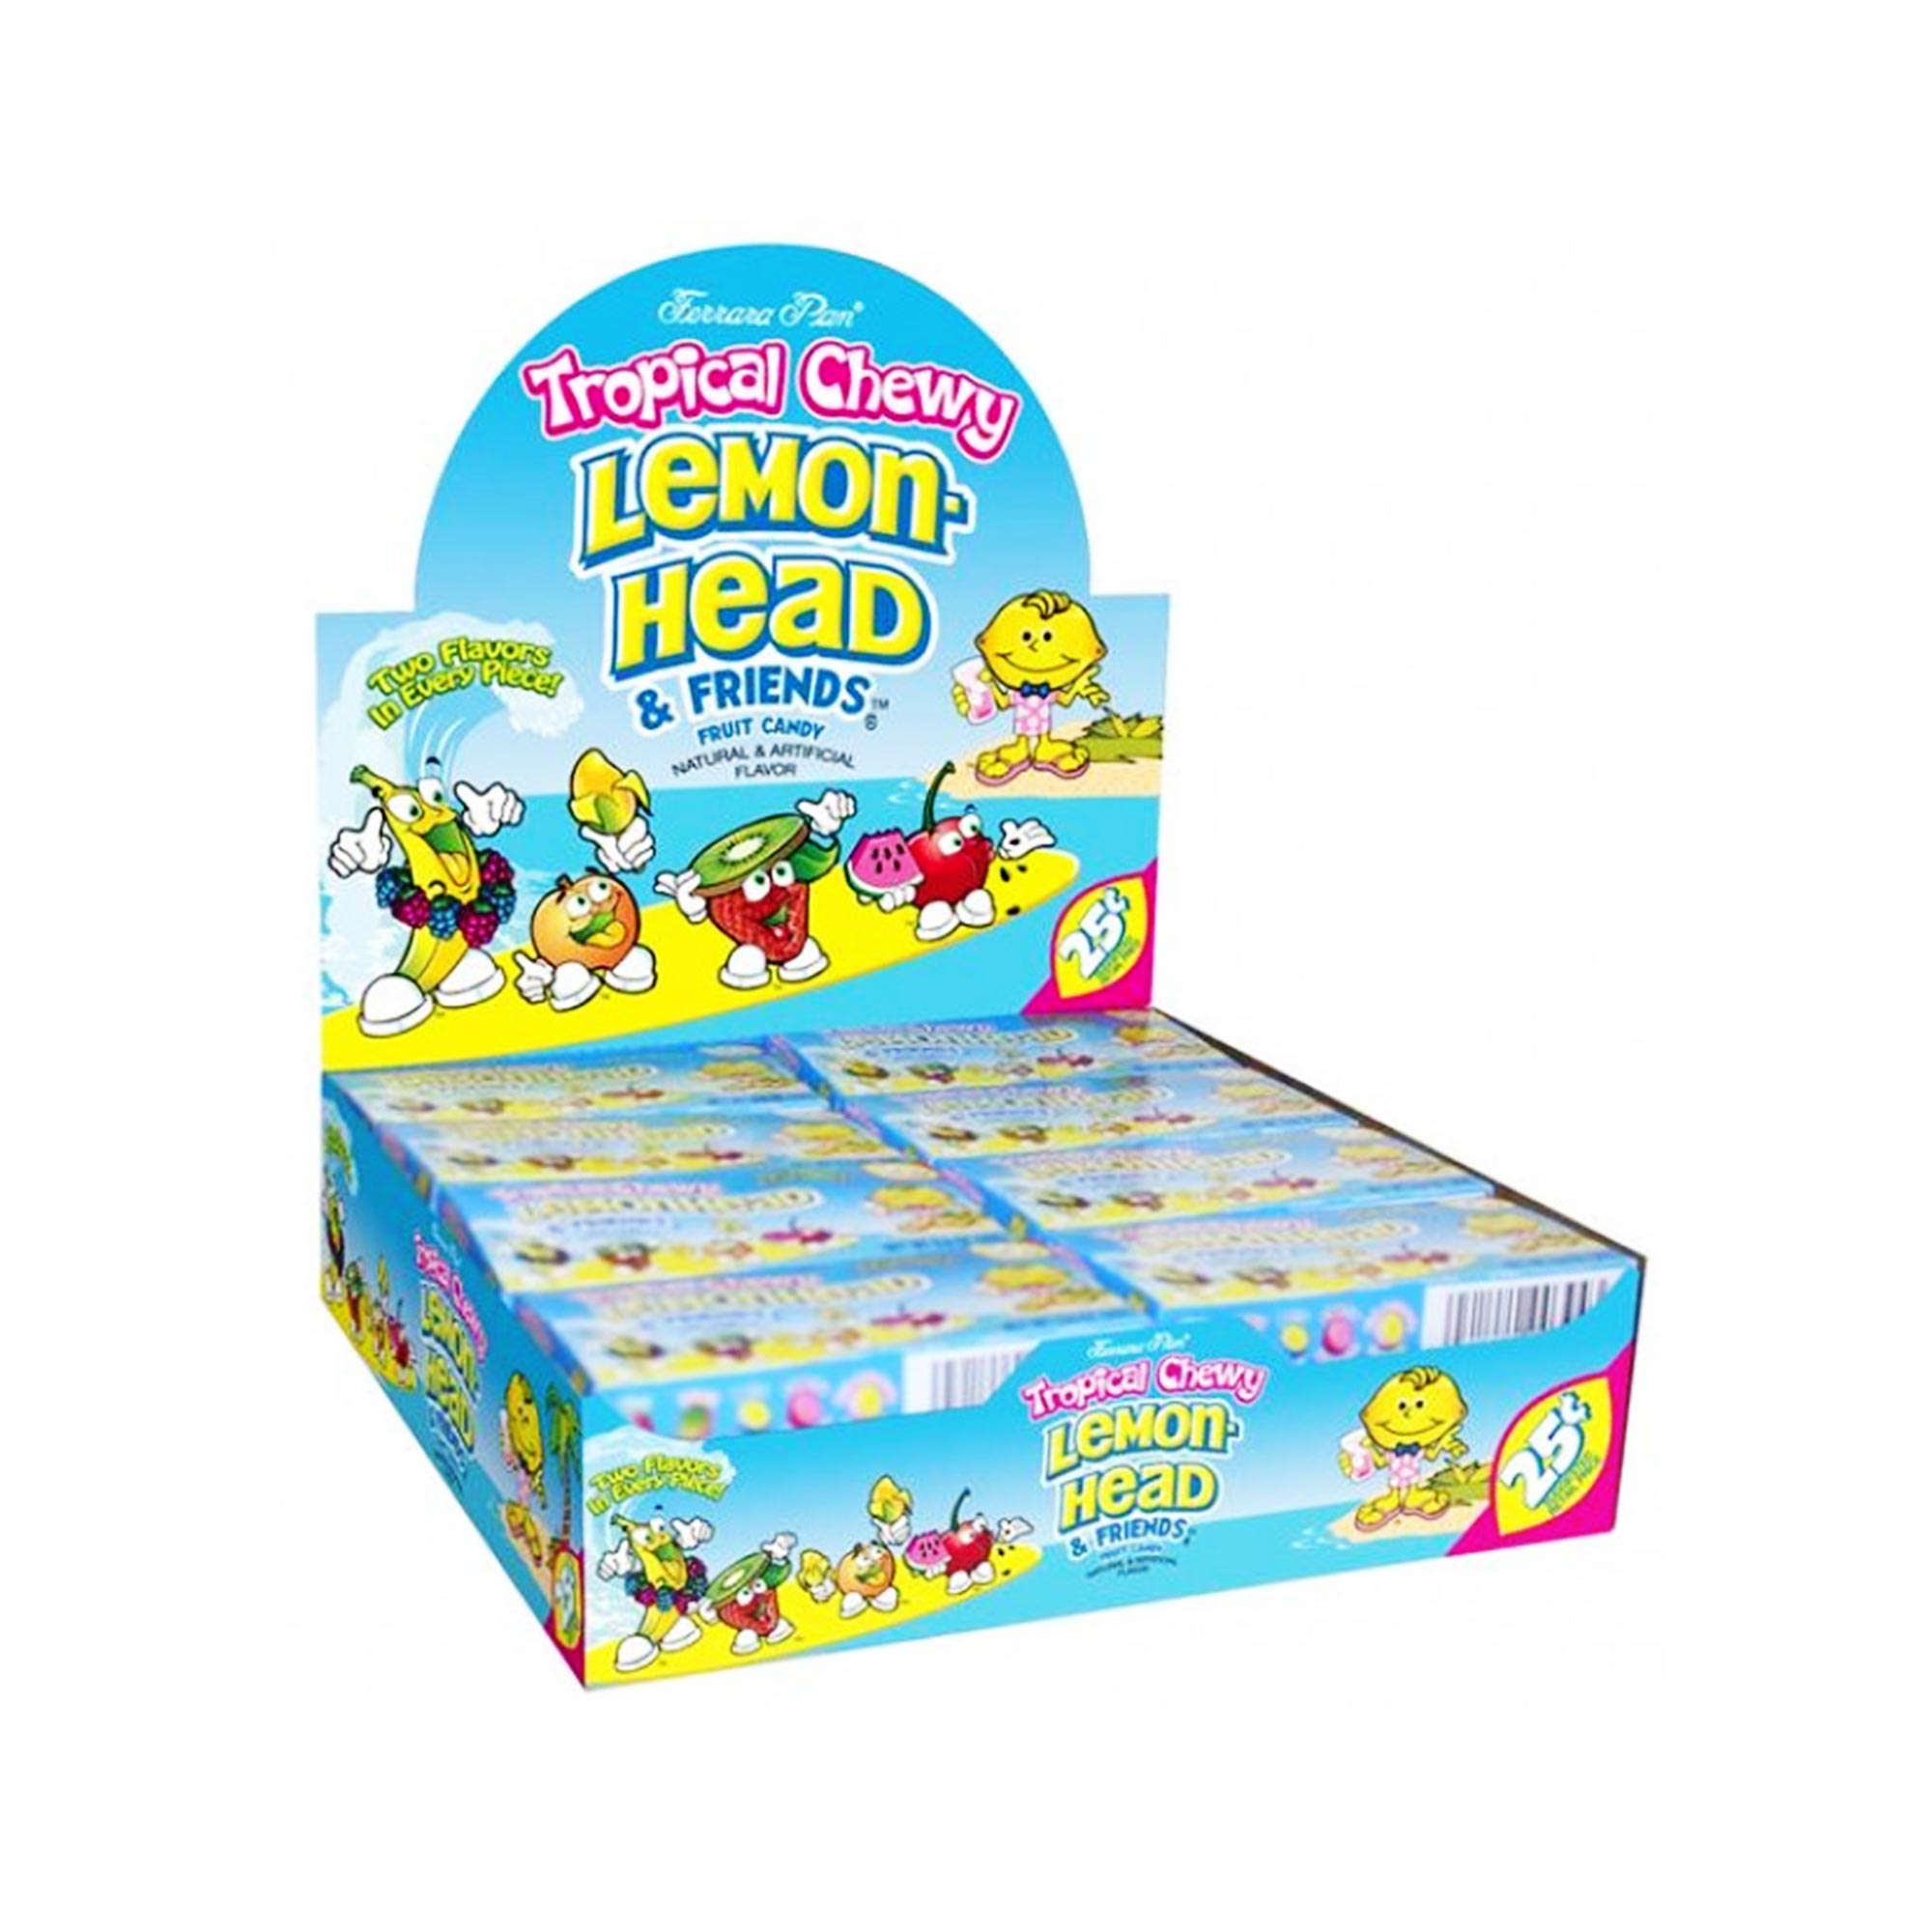 https://voltcandy.com/wp-content/uploads/2015/02/Chewy-lemonhead-candy.jpg